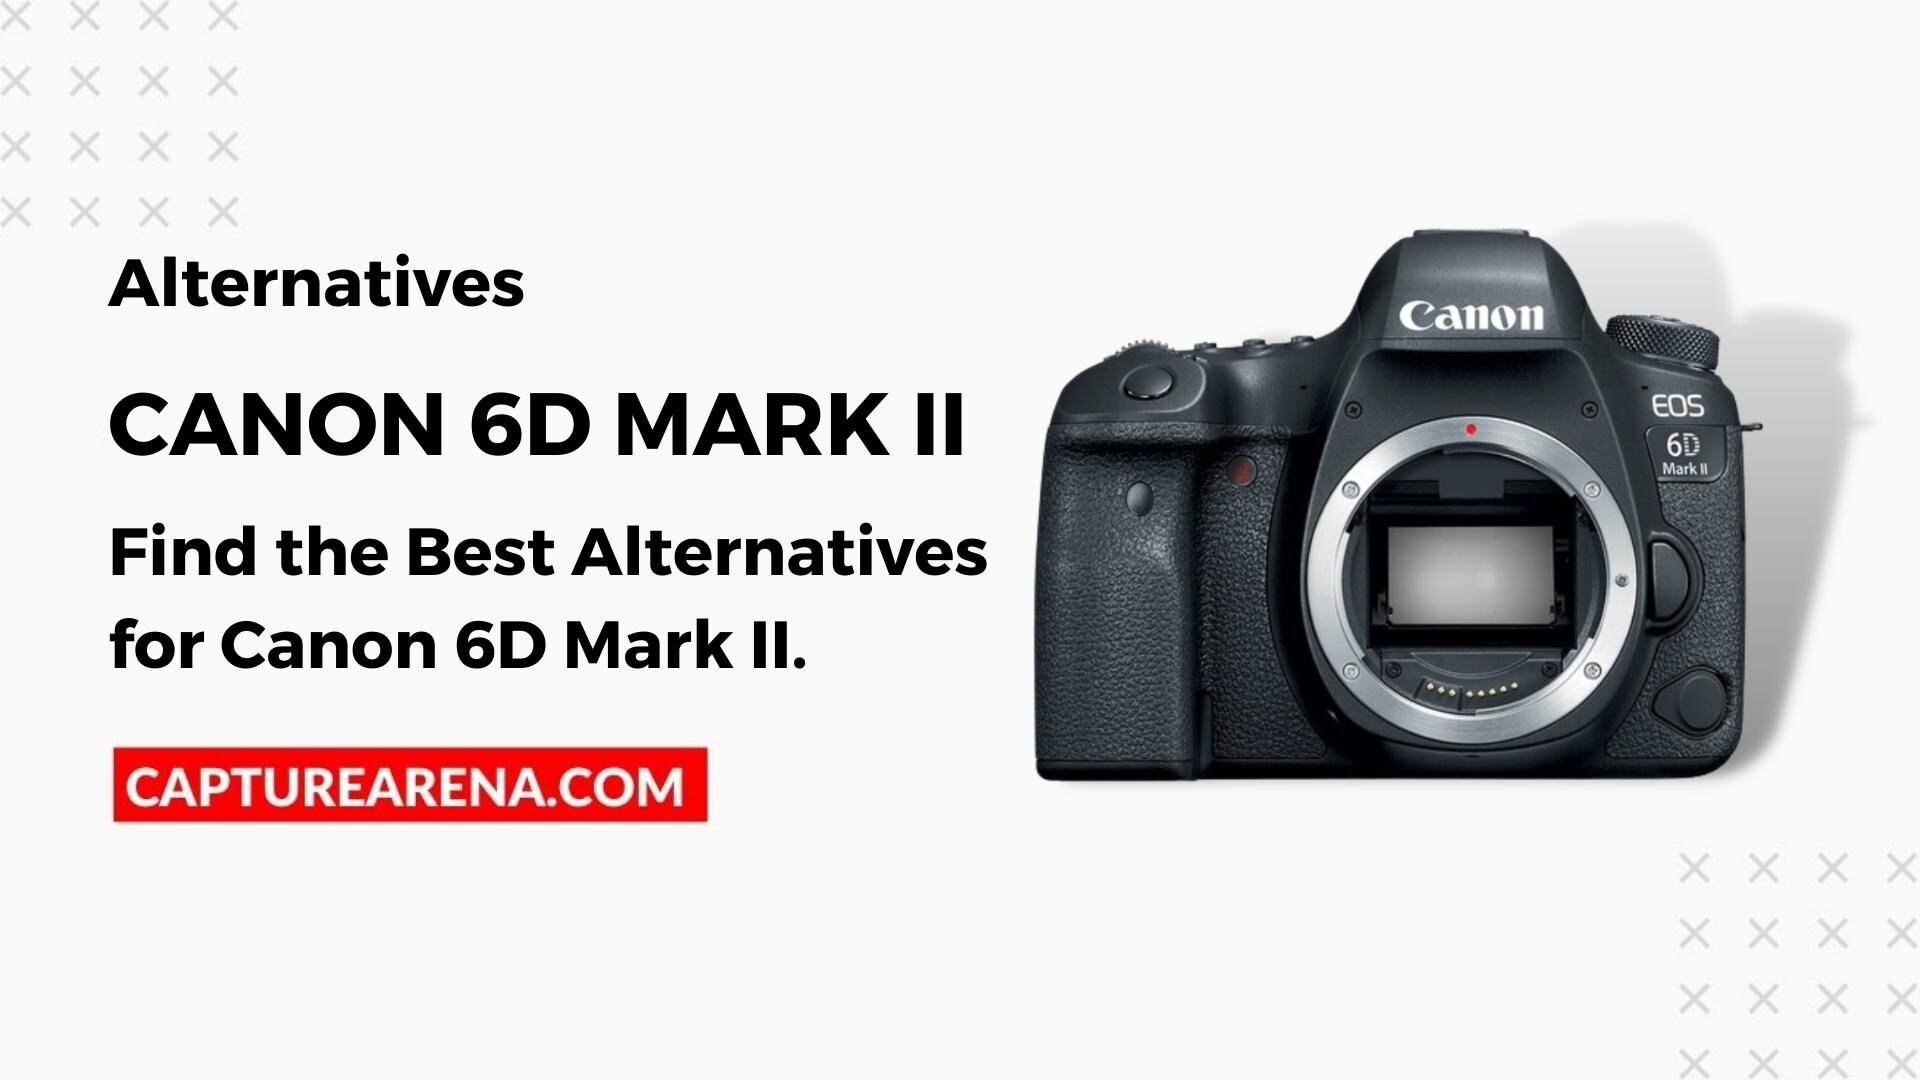 Canon 6D Mark II Alternatives